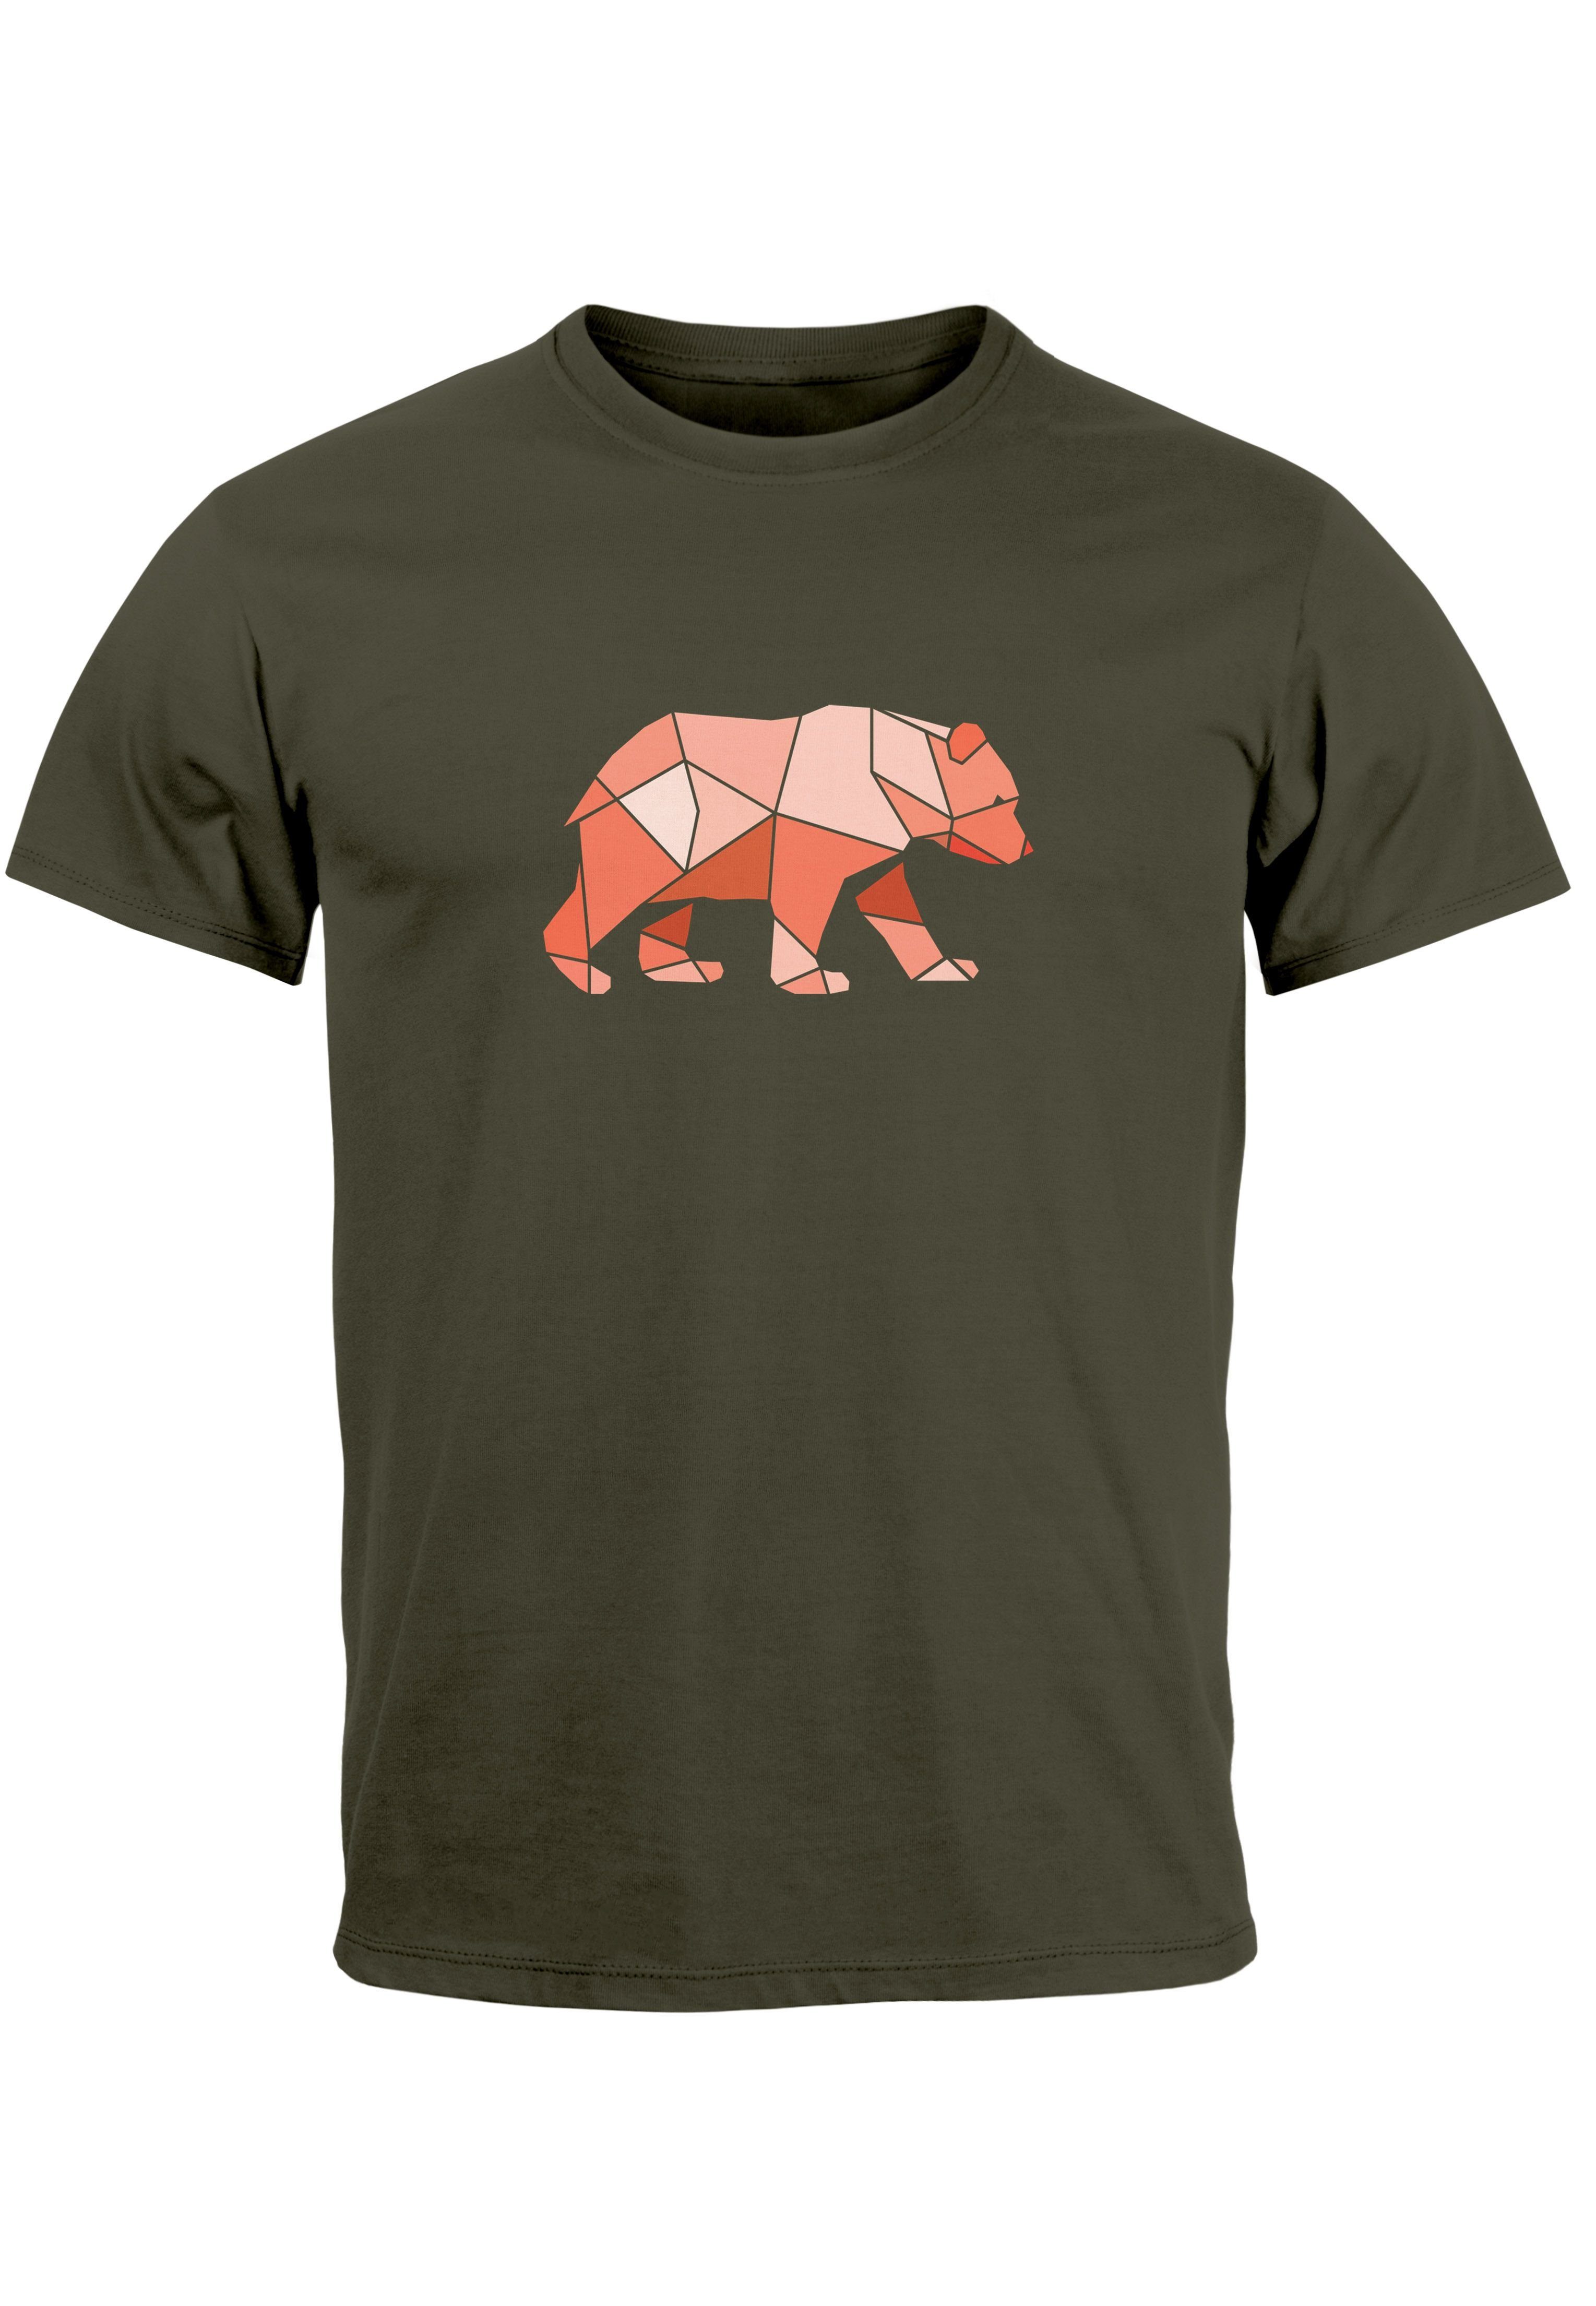 Natur Outdoor Printshirt Print mit Neverless Polygon Bär Grafik Print-Shirt Fash army Herren Motive T-Shirt